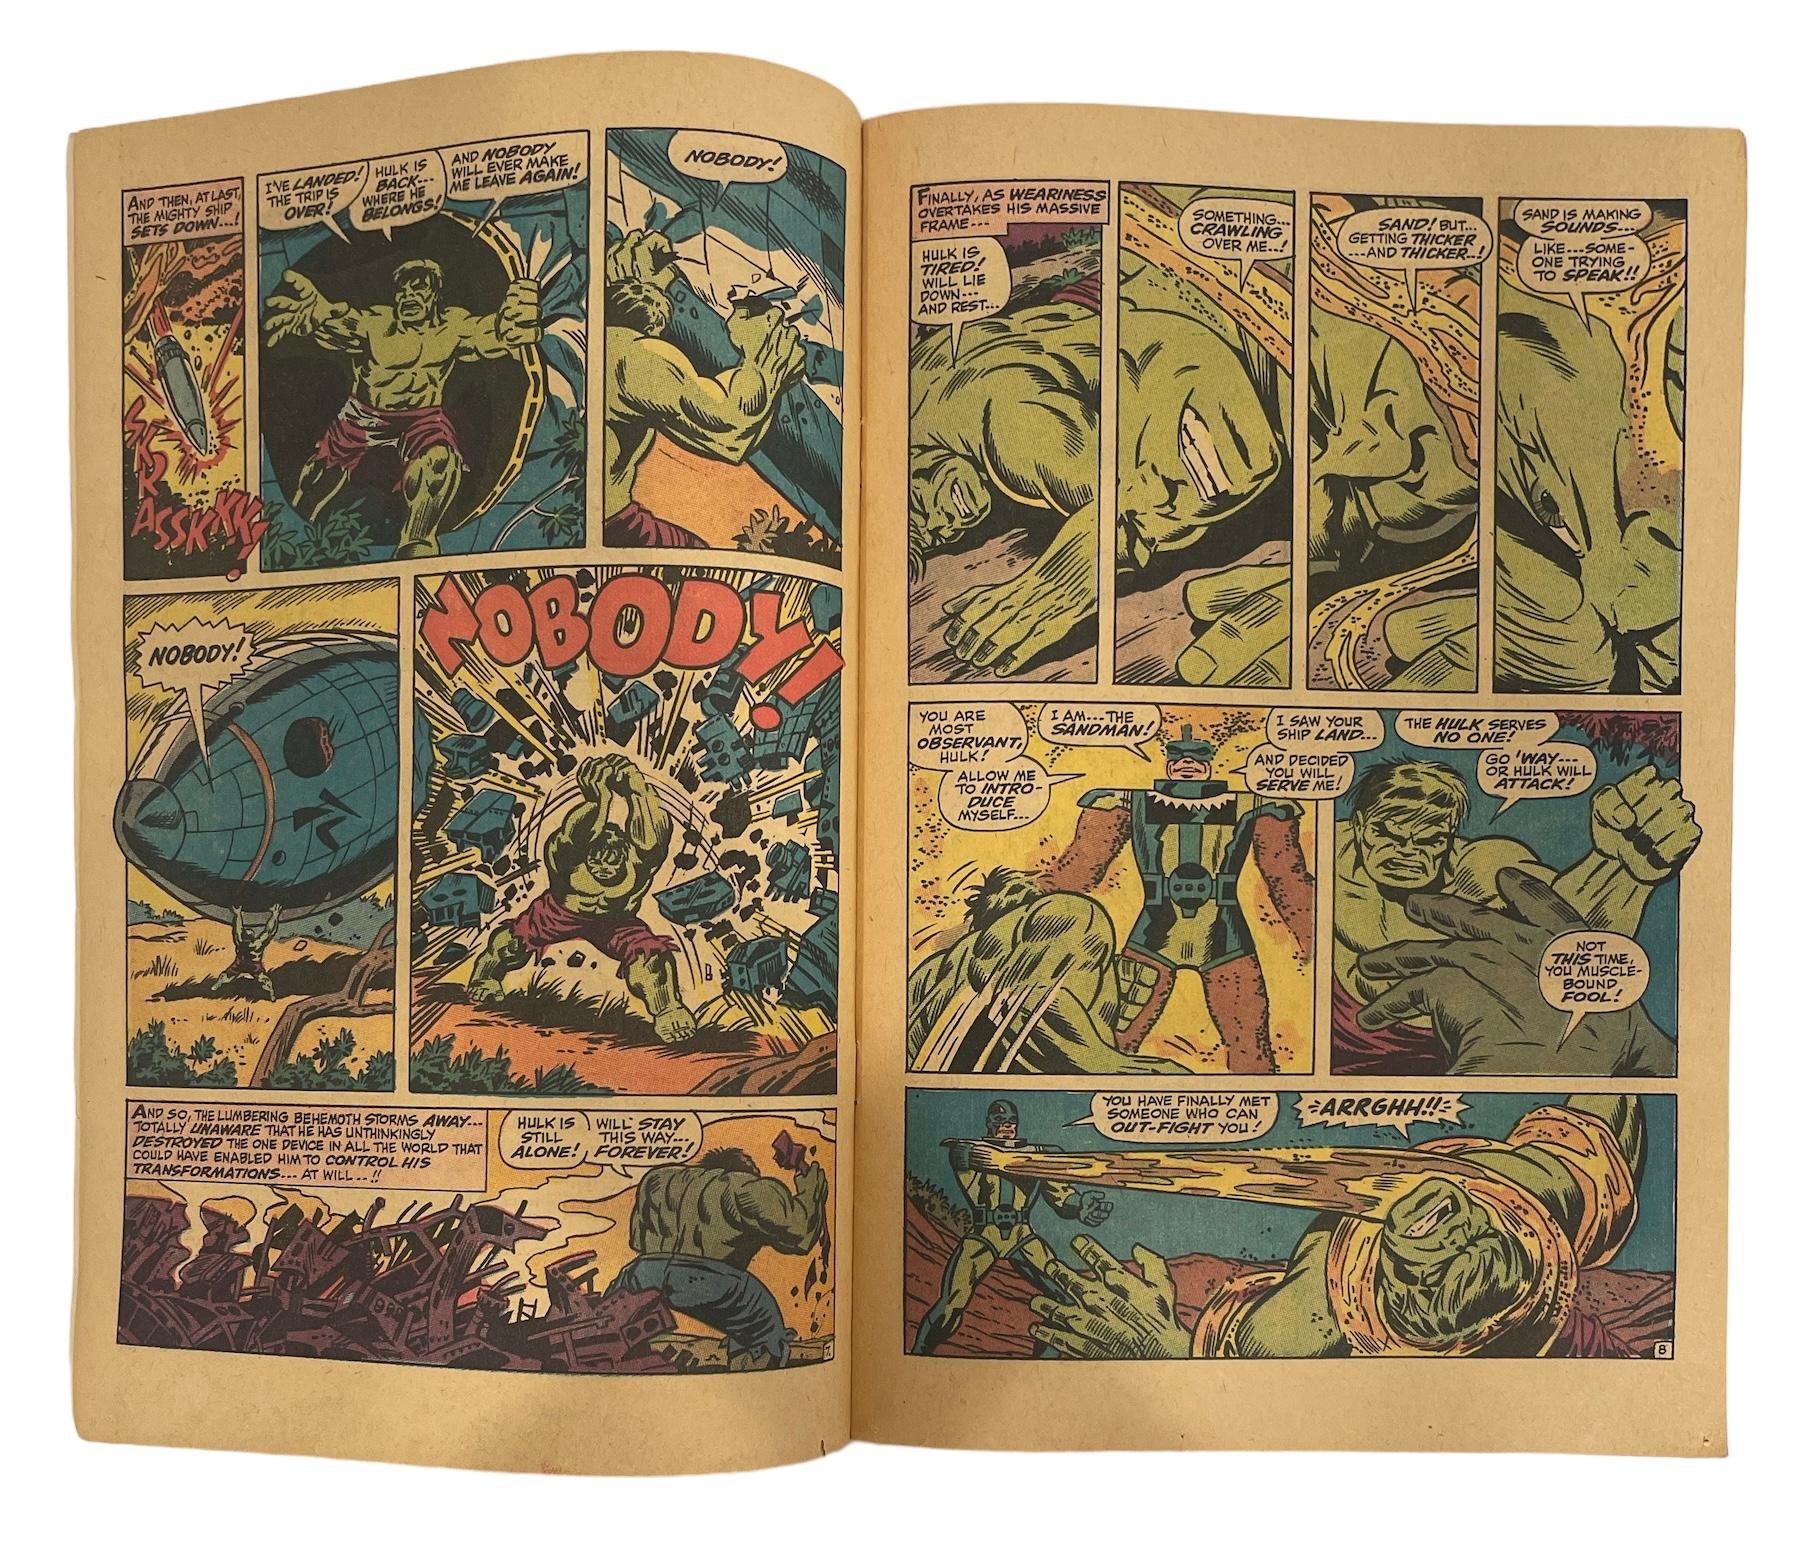 Vintage Marvel Comics - The Incredible Hulk Series No.113 and No.212